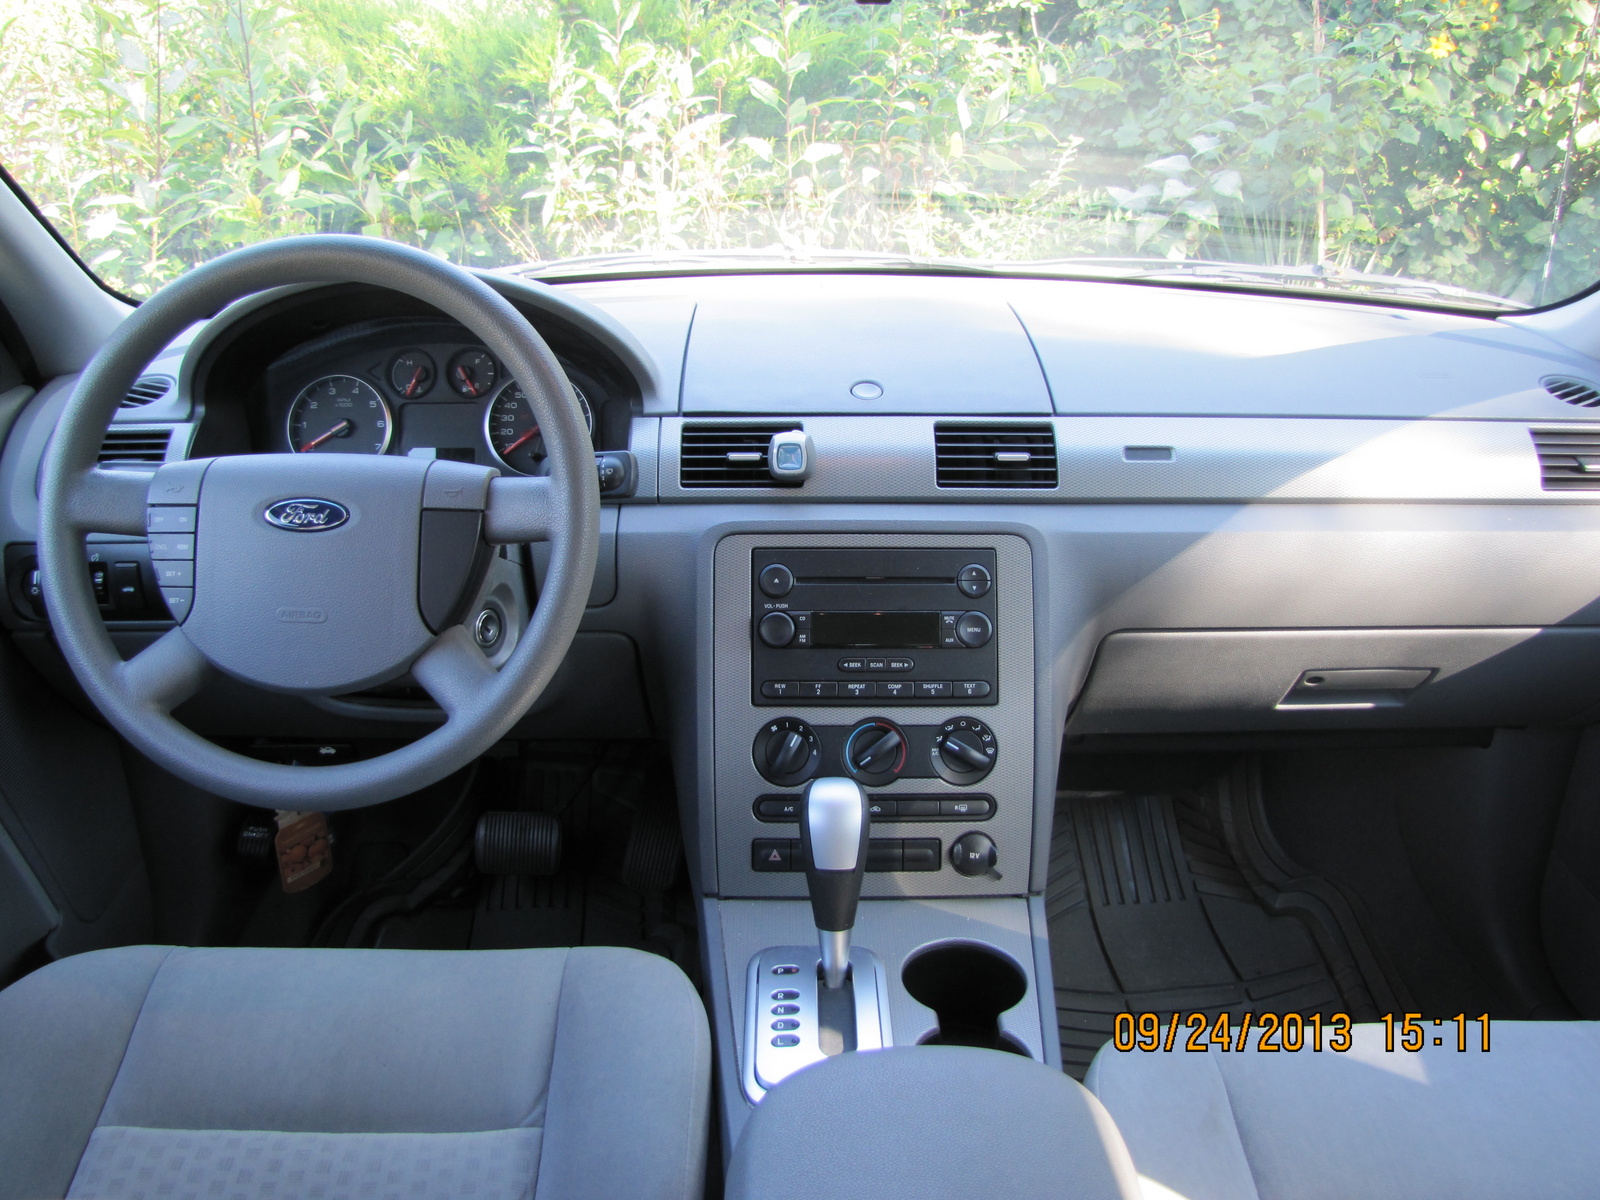 2005 Ford five hundred interior #6